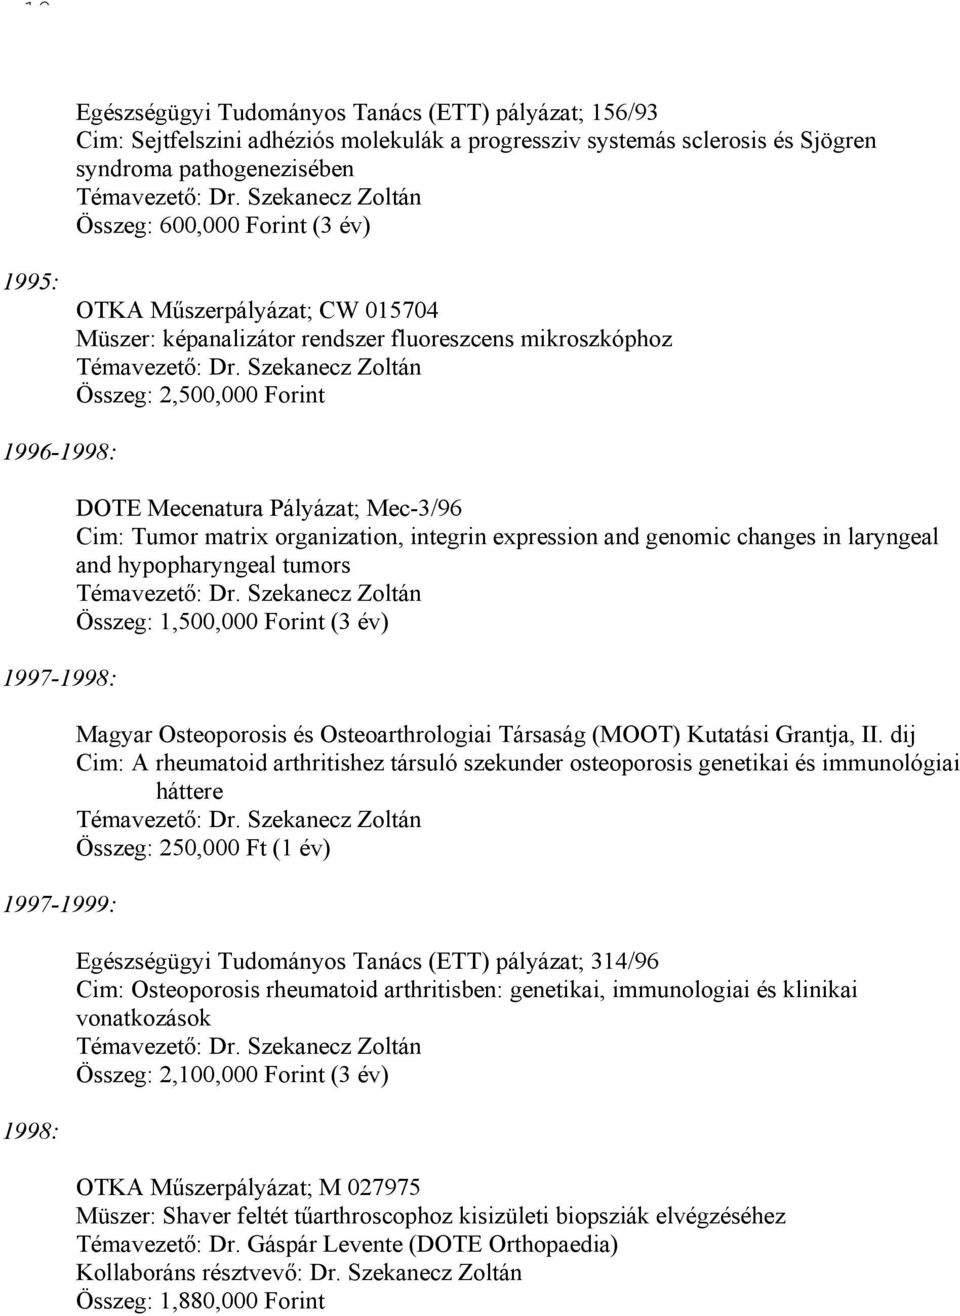 Szekanecz Zoltán Összeg: 2,500,000 Forint 1996-1998: 1997-1998: 1997-1999: 1998: DOTE Mecenatura Pályázat; Mec-3/96 Cim: Tumor matrix organization, integrin expression and genomic changes in